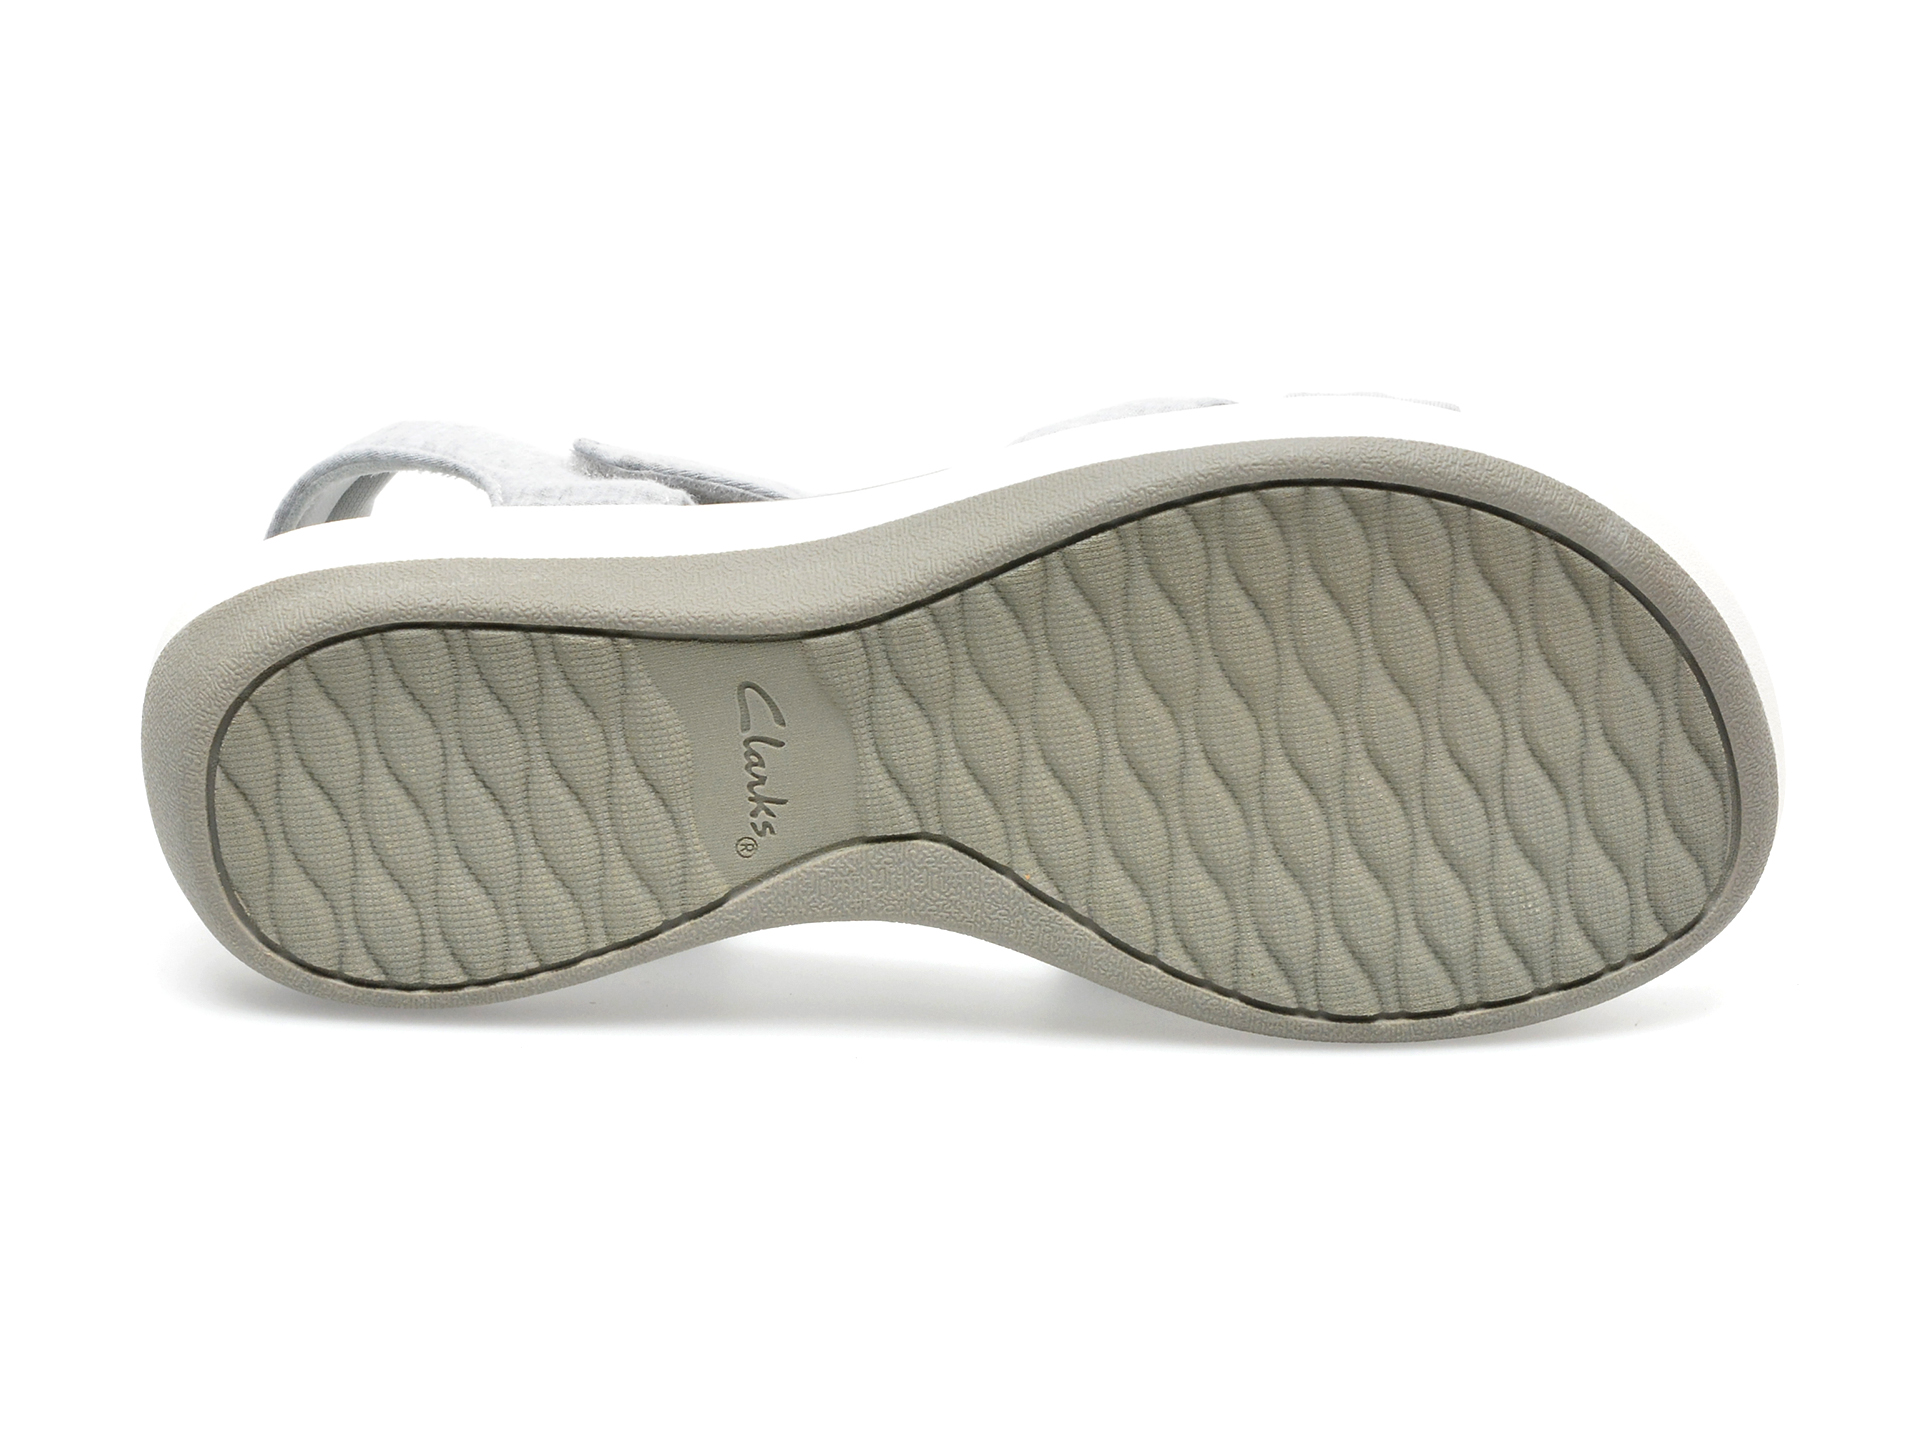 Sandale CLARKS gri, ARLA SHORE 0912, din material textil